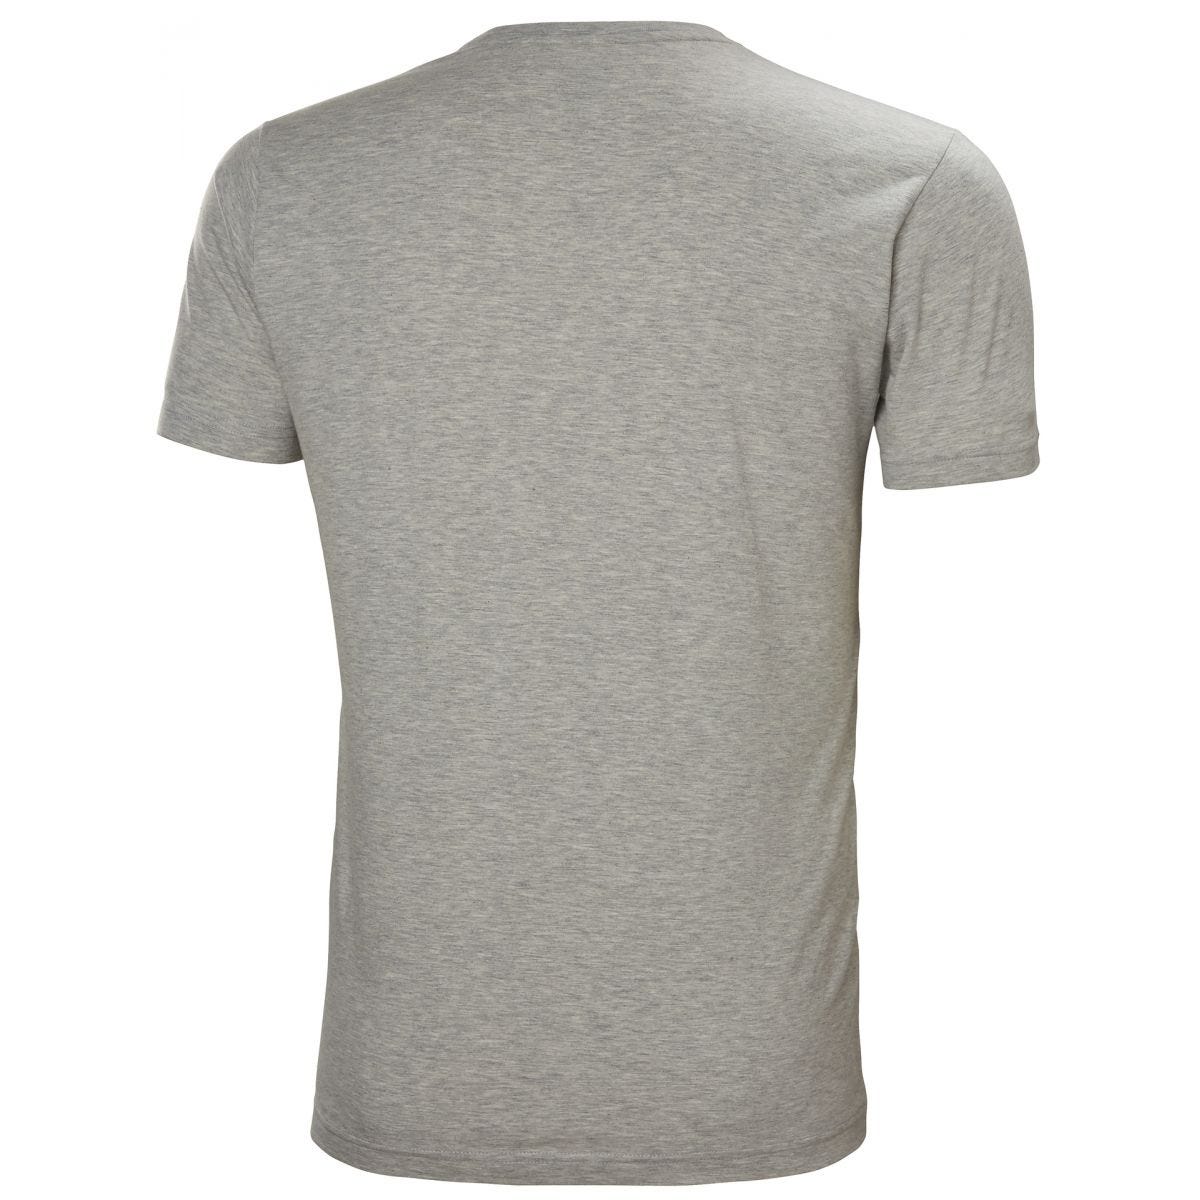 Tee-shirt Kensington Gris/Camo - Helly Hansen - Taille M 1